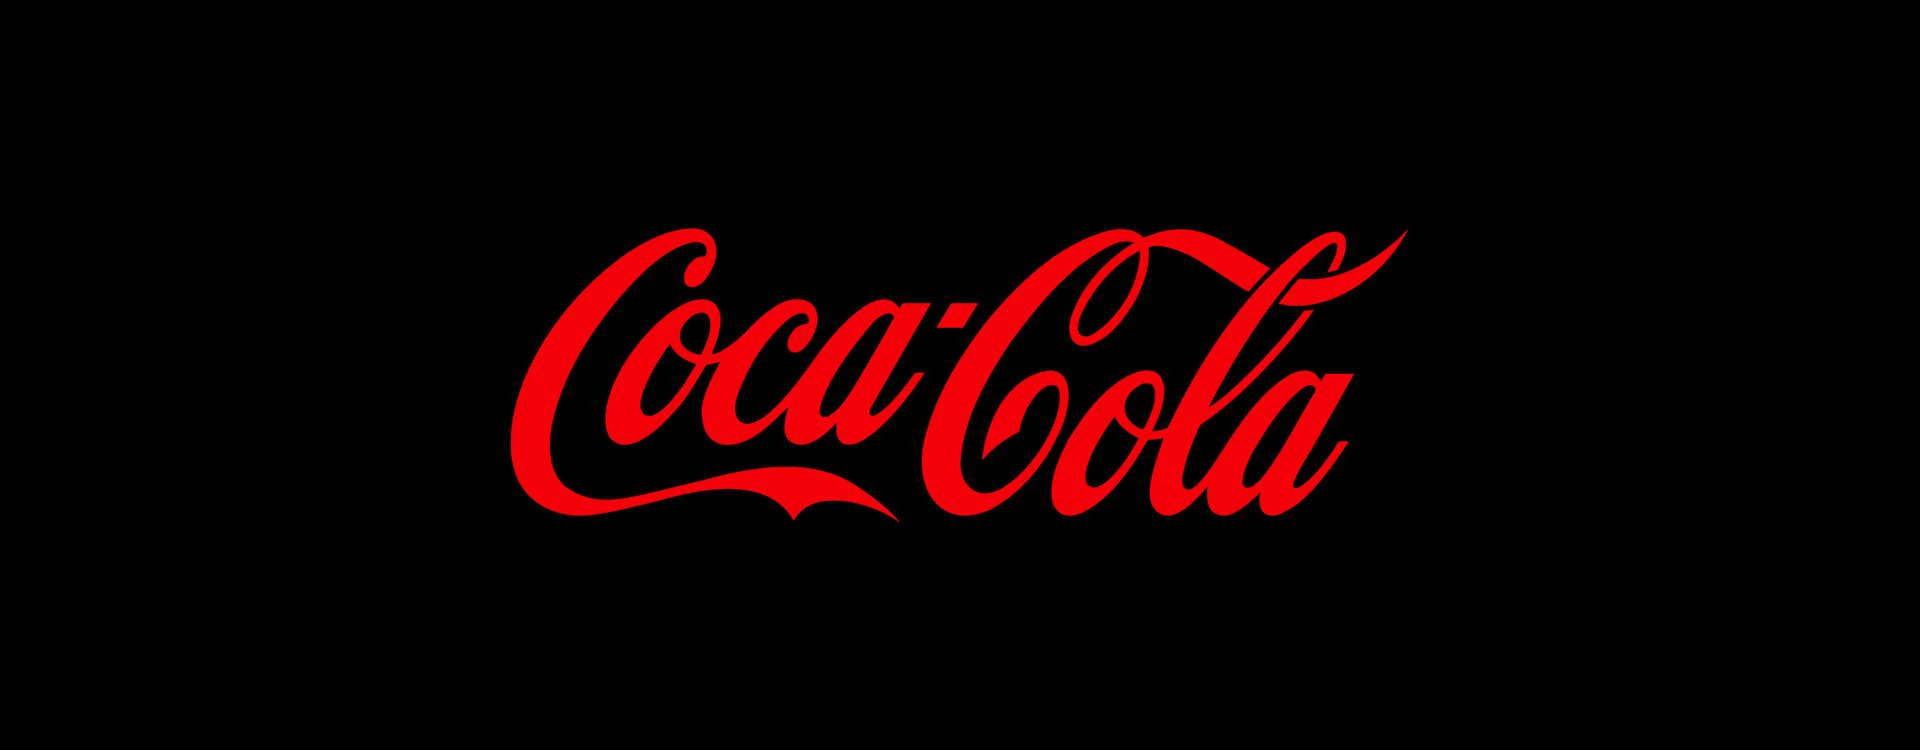 Coca-Cola Almana